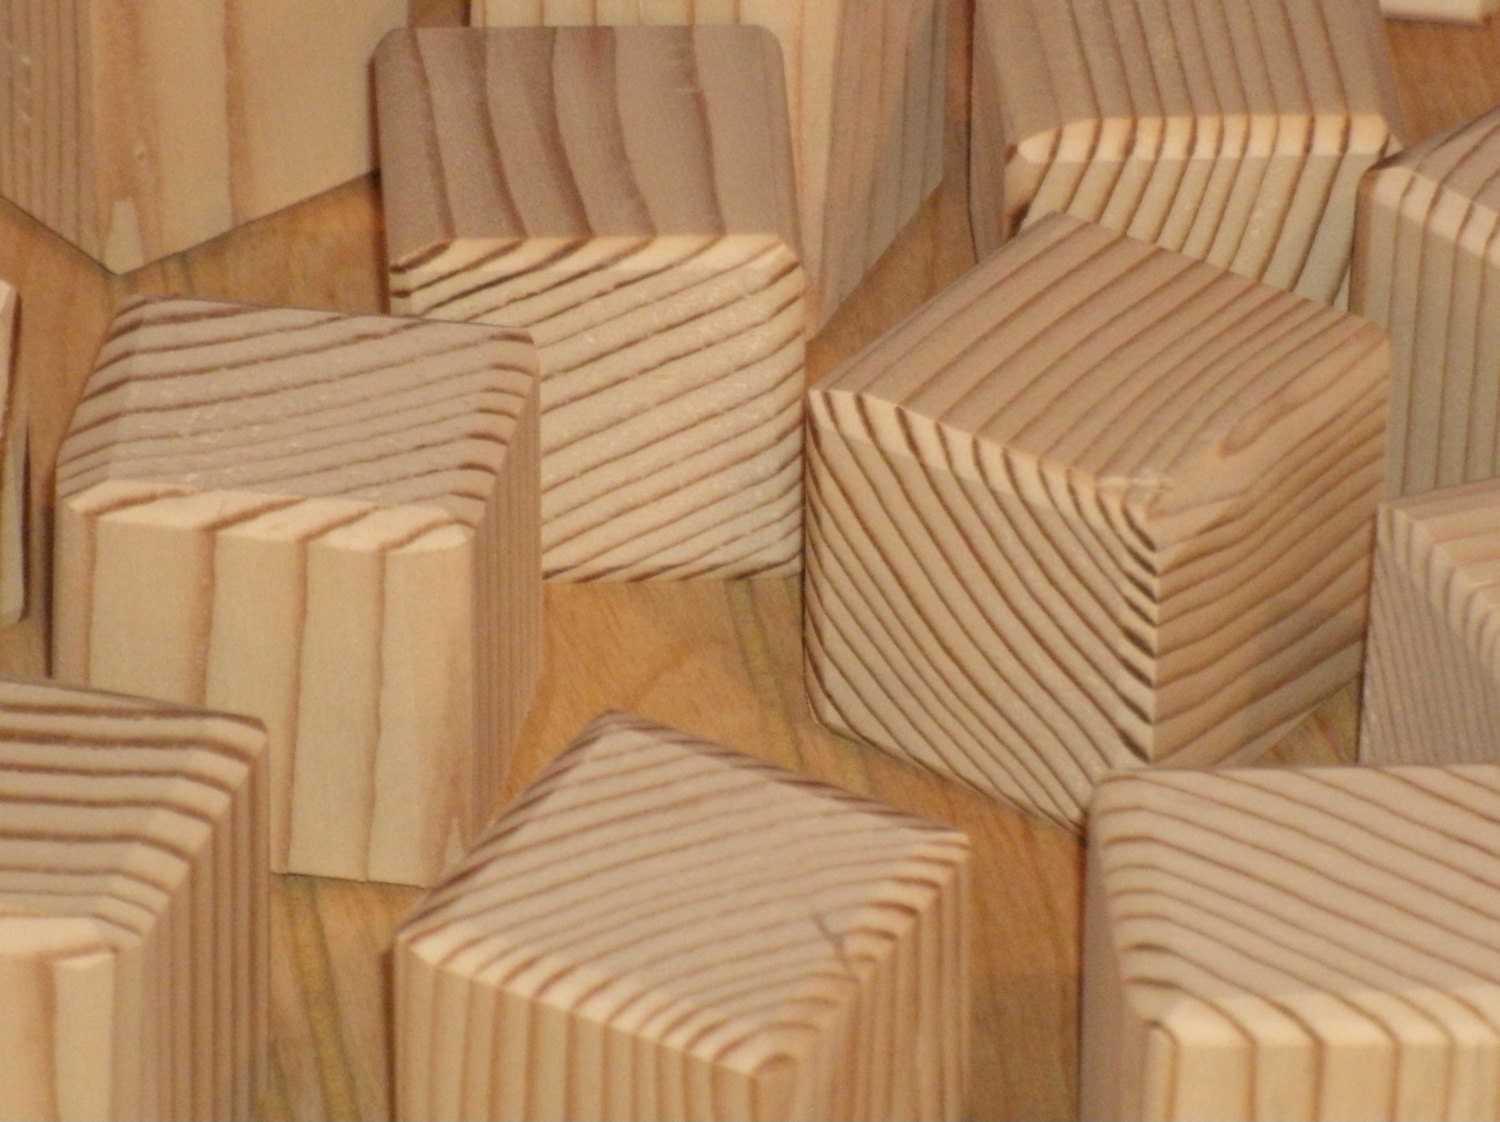 Tiny Wood Box, Tiny Wooden Blocks, Math Manipulatives, ABC Blocks